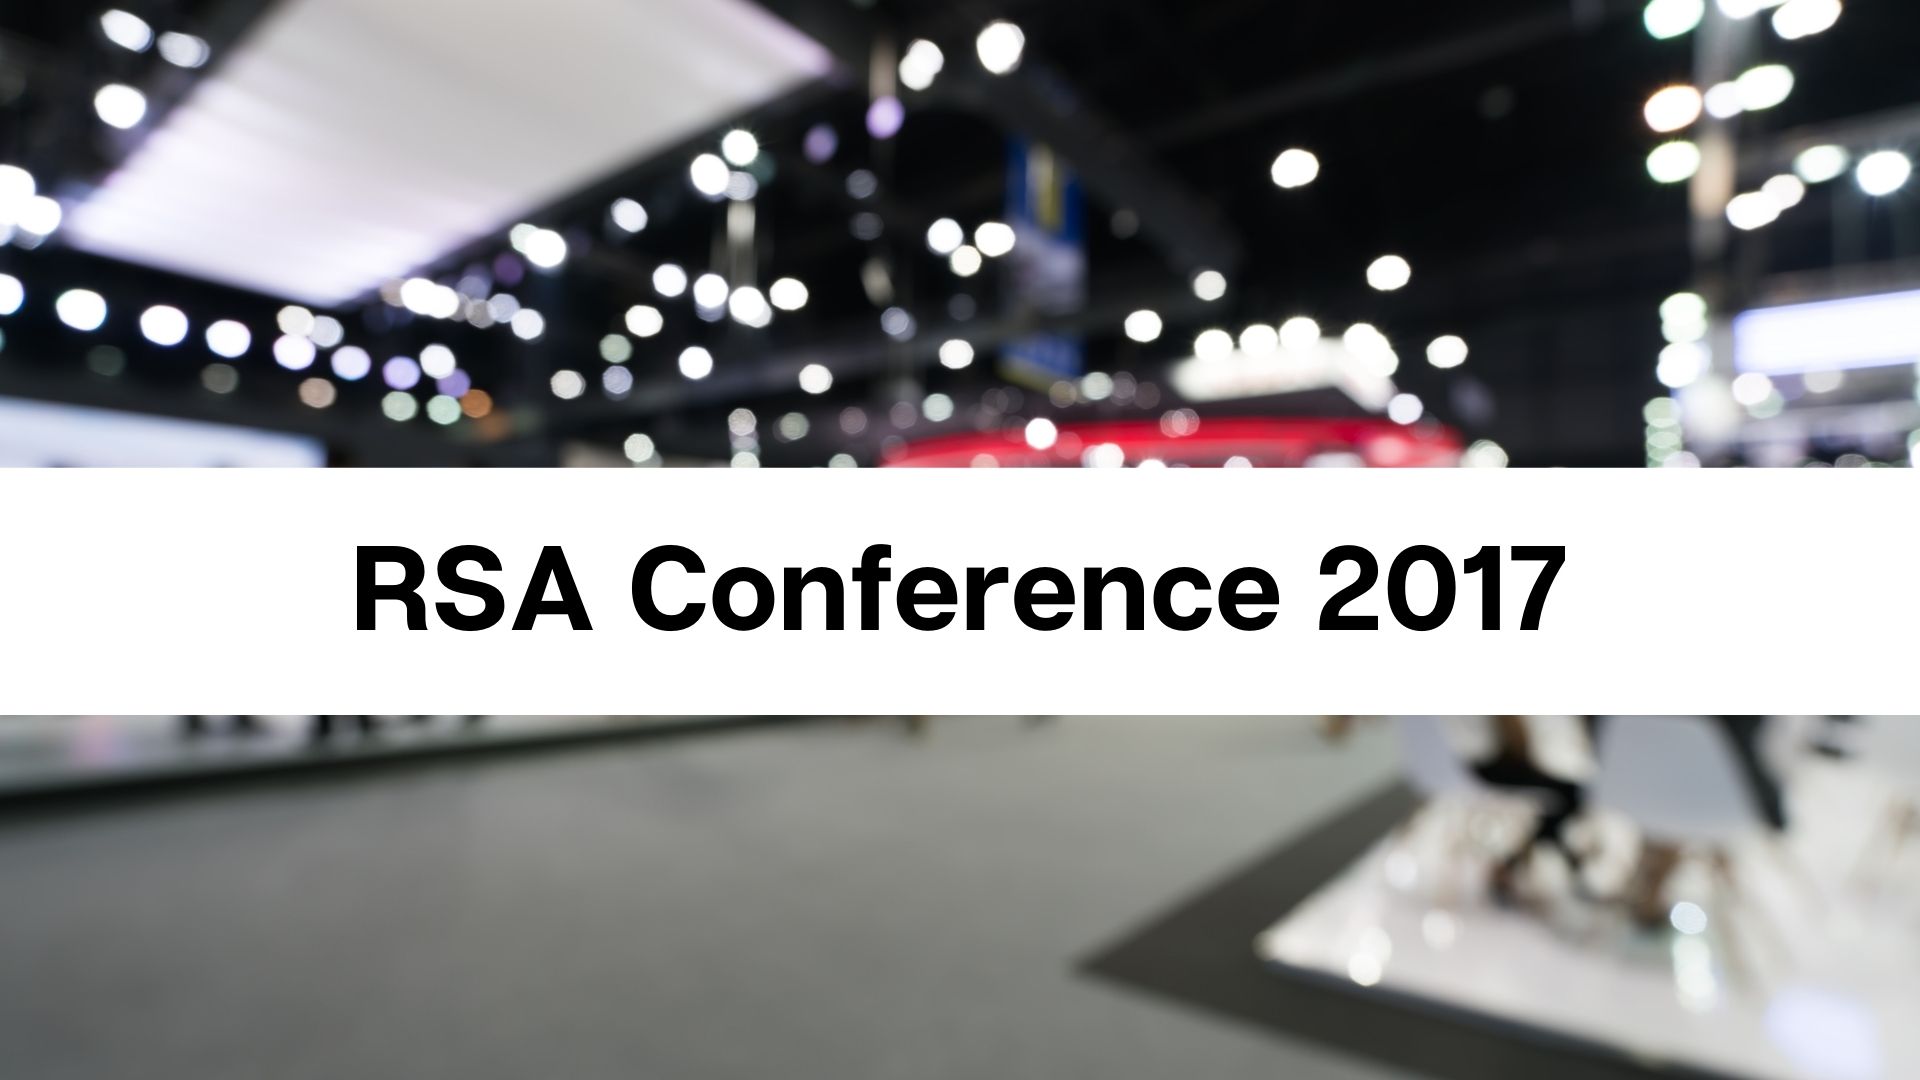 https://www.groundlabs.com/wp-content/uploads/2017/02/RSA-Conference-2017.jpg